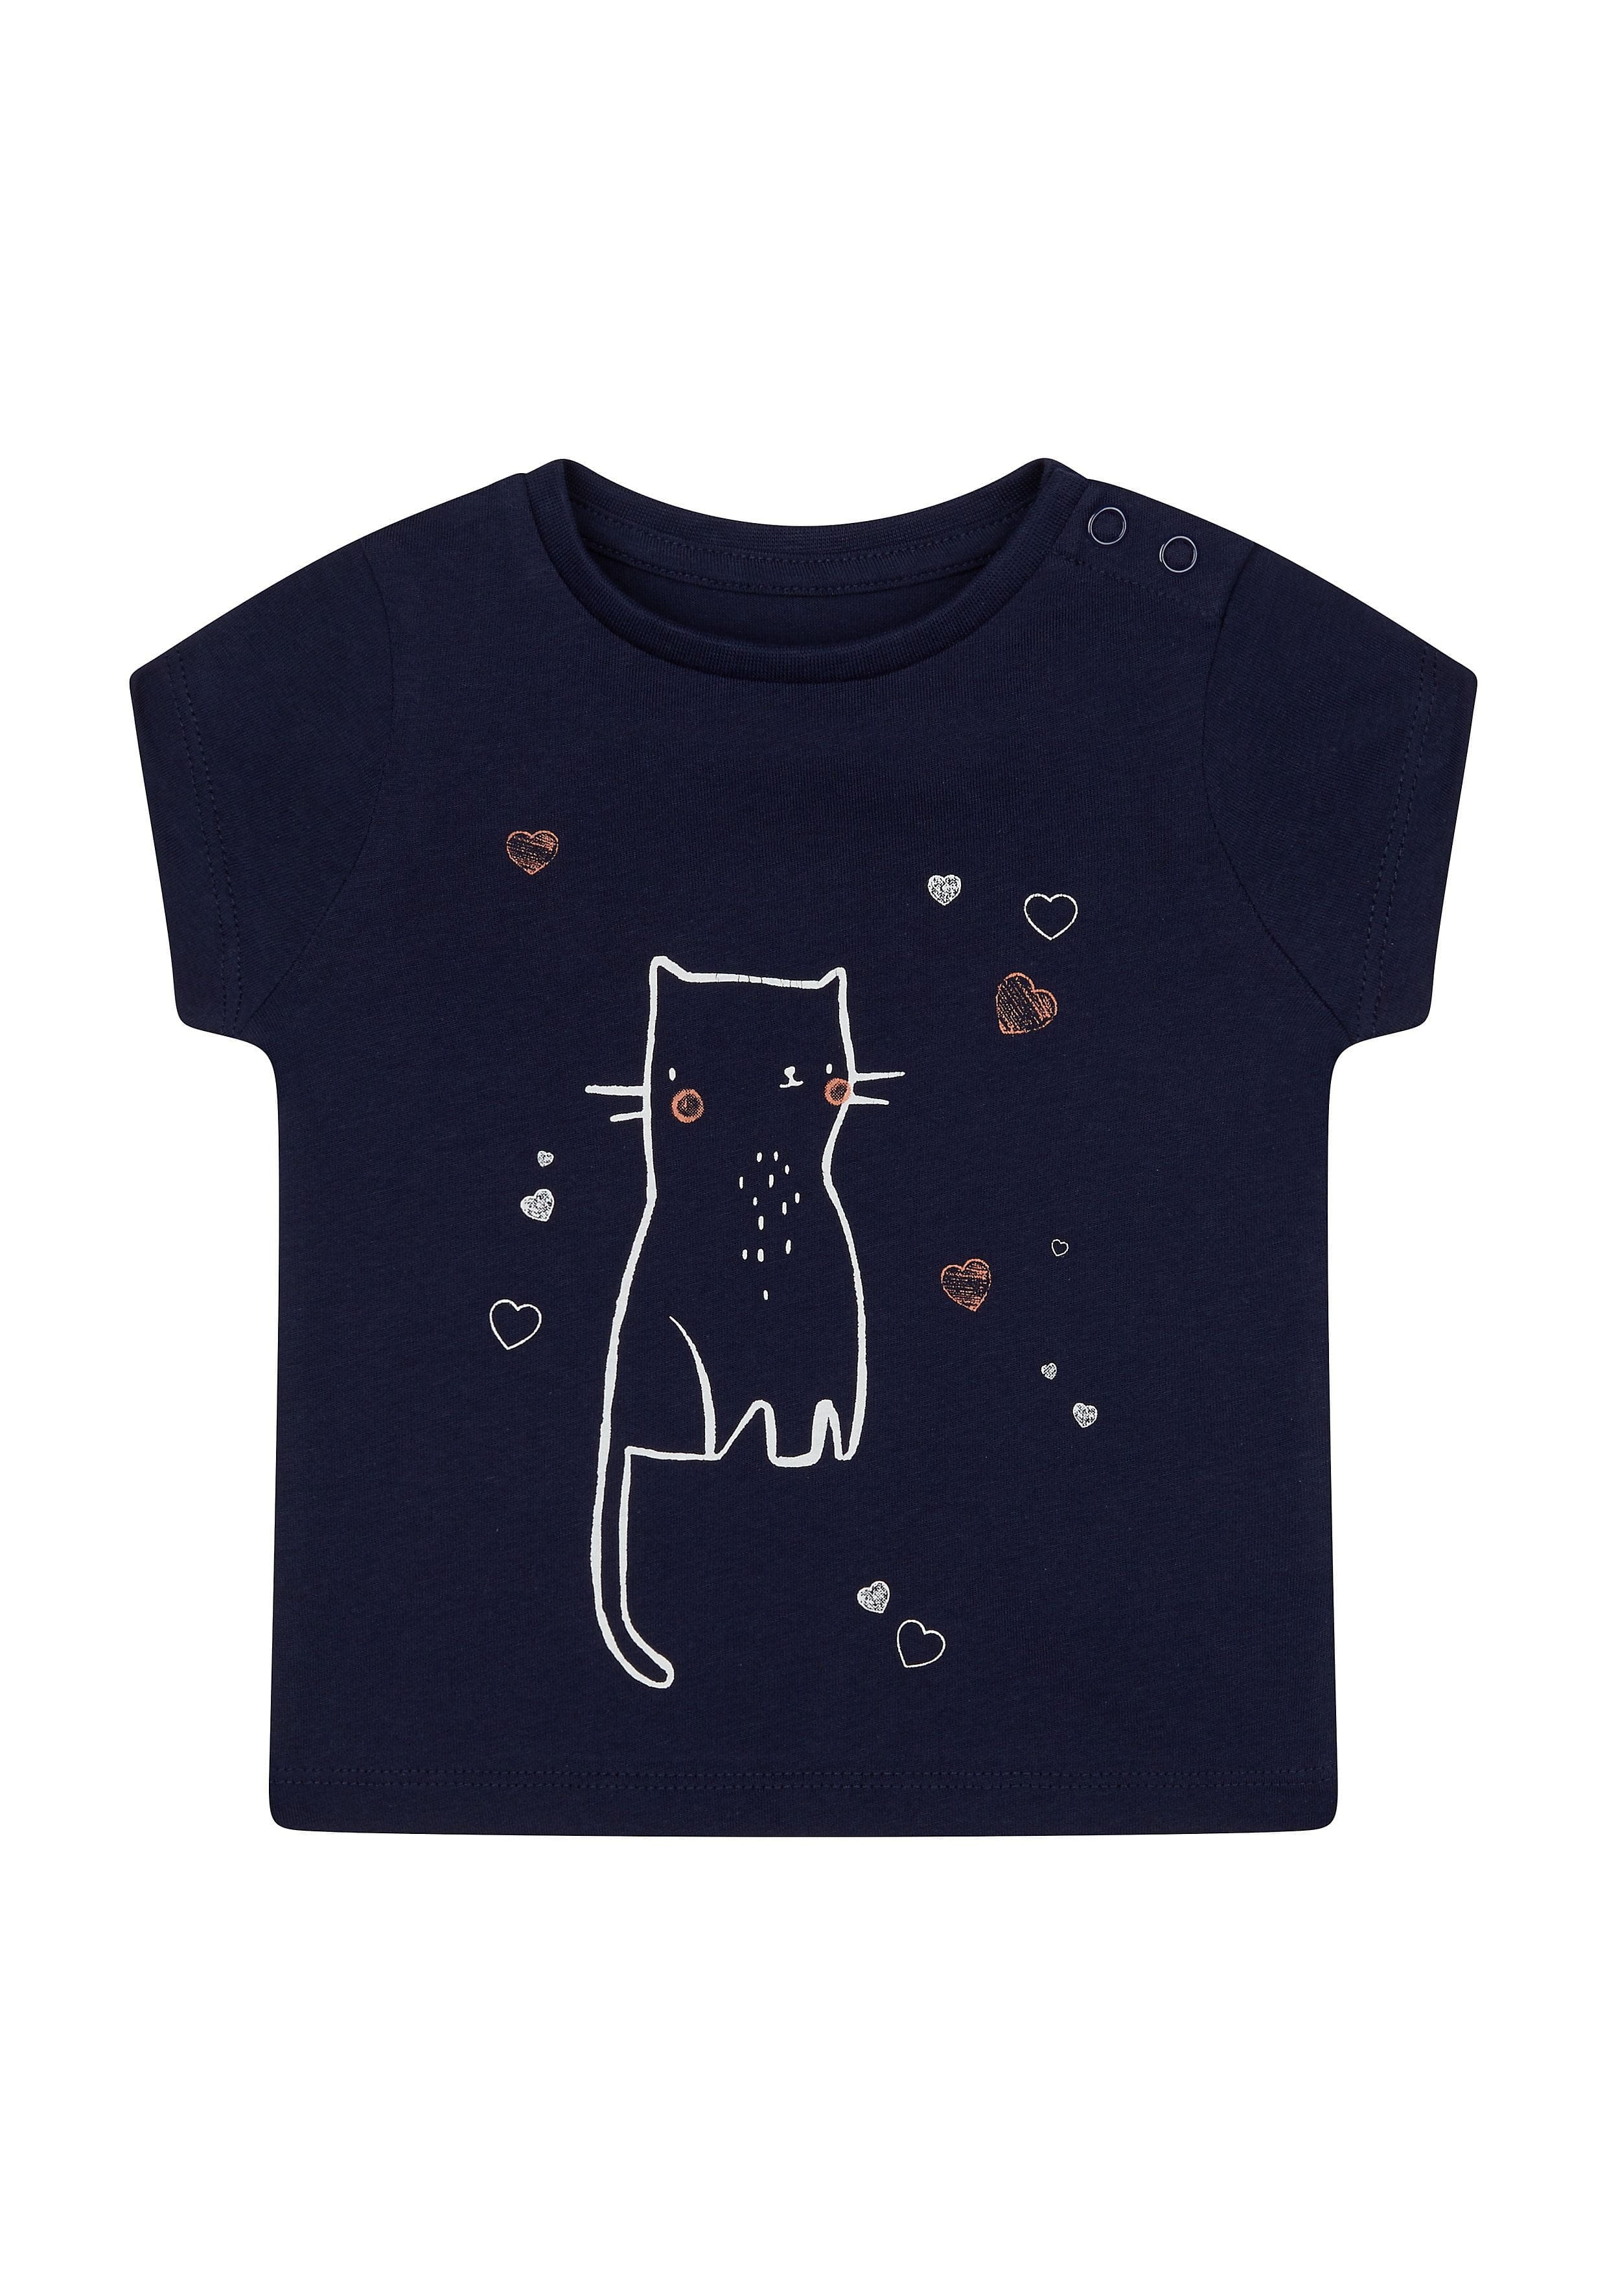 Mothercare | Navy Printed T-Shirt 0